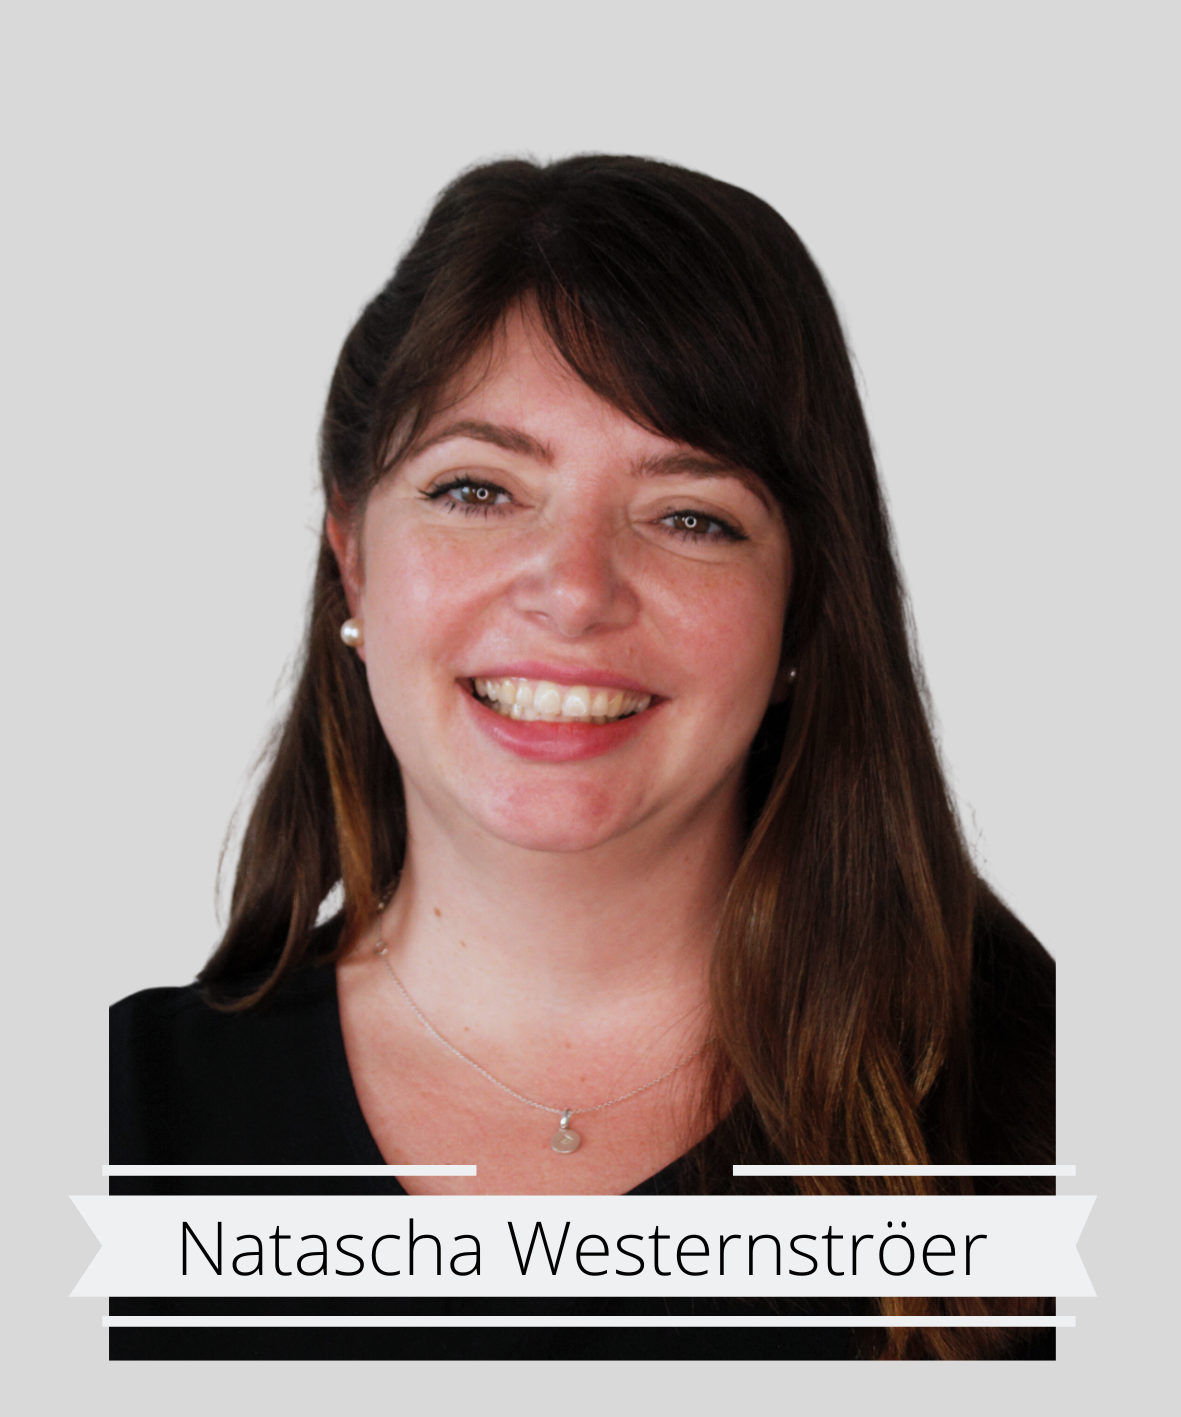 Natasha Westernströer